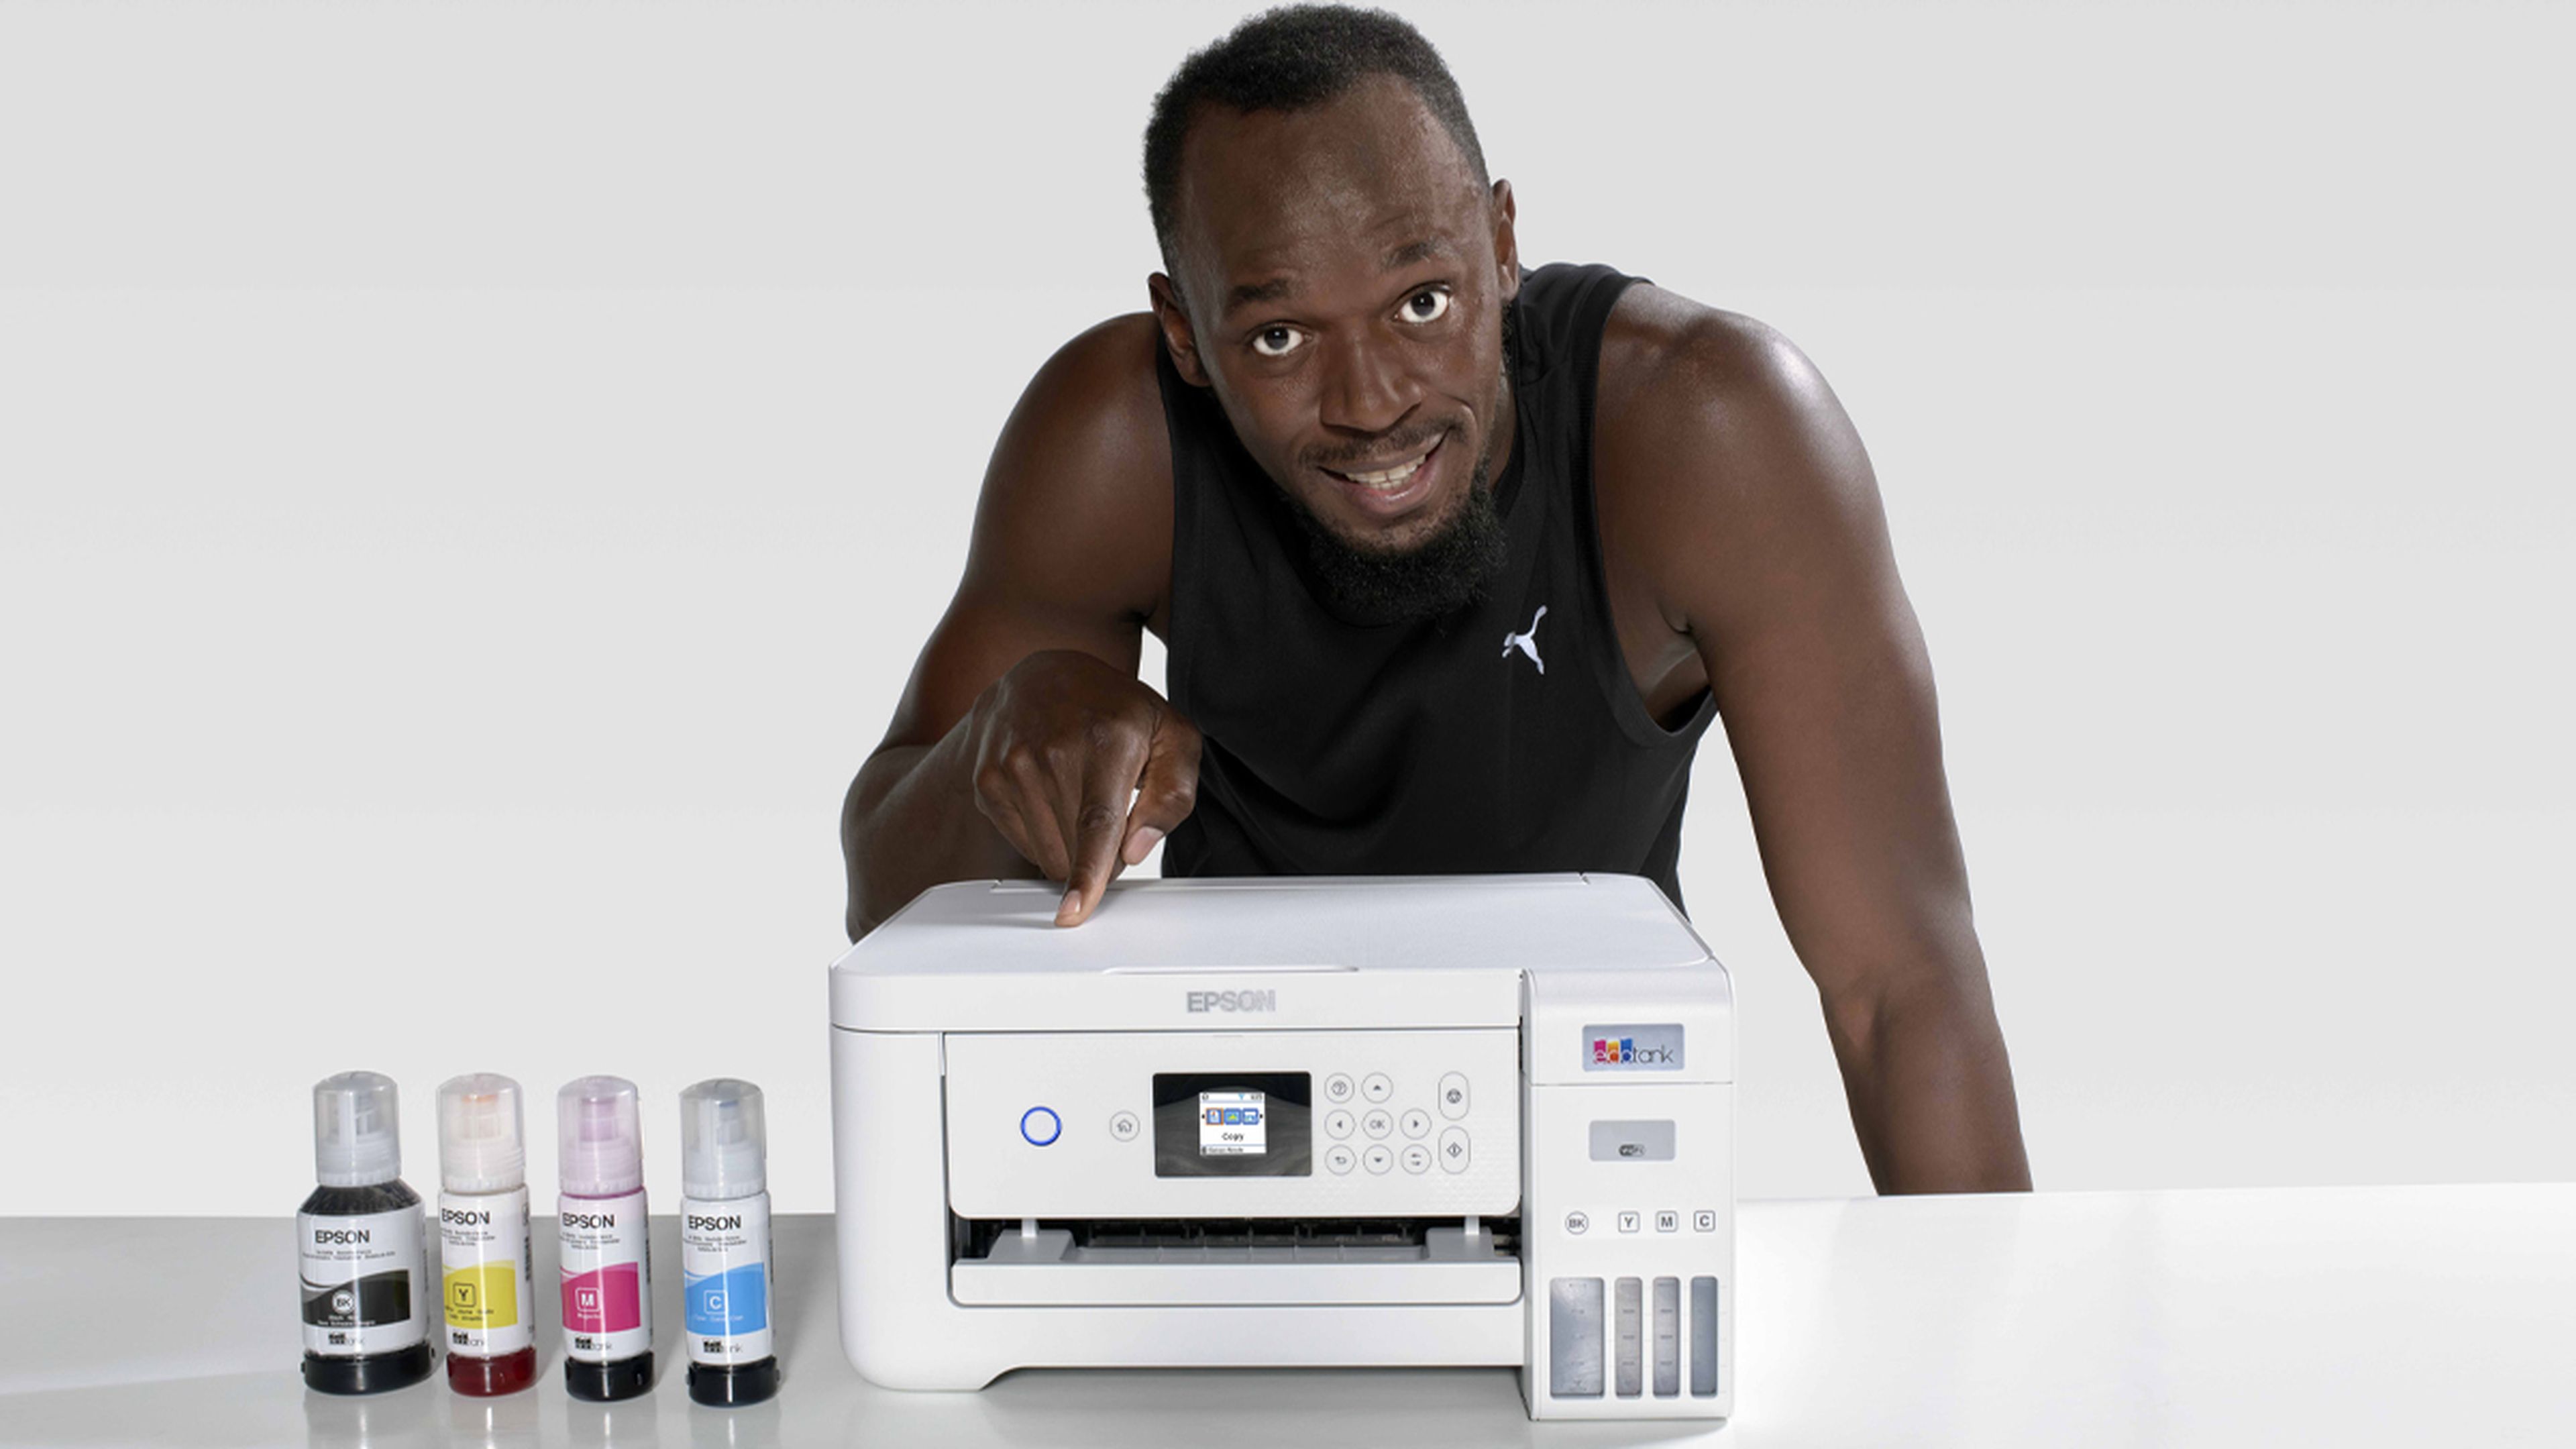 Impresora y Usain Bolt